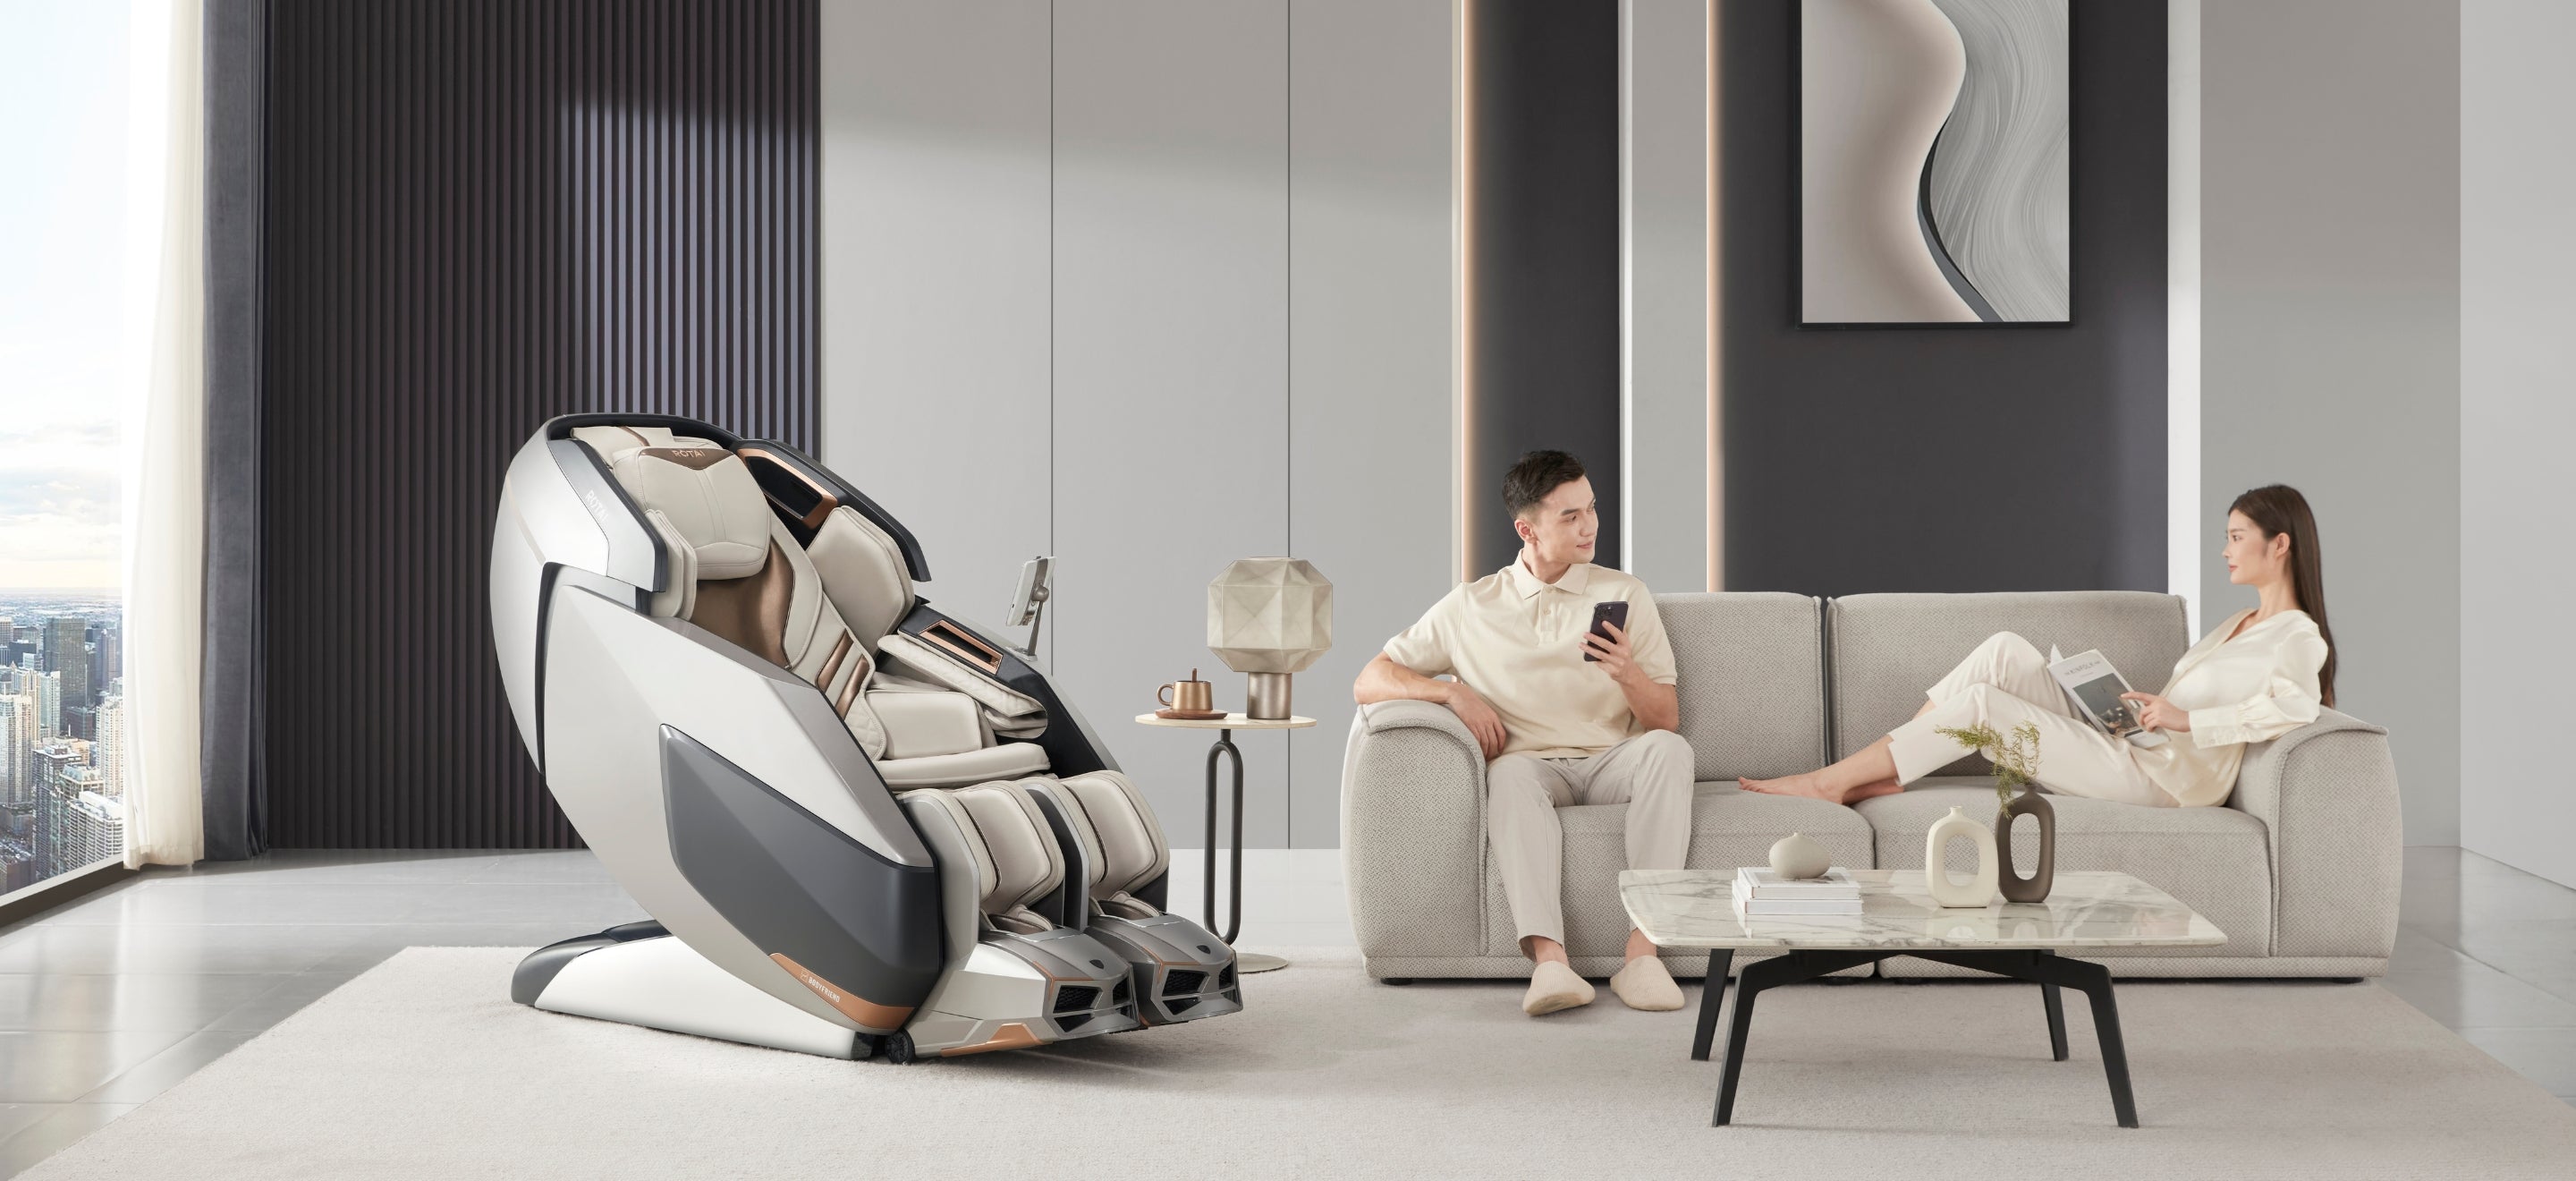 Massage Chair - Rotai - كرسي التدليك - buy massage chair online- shop now